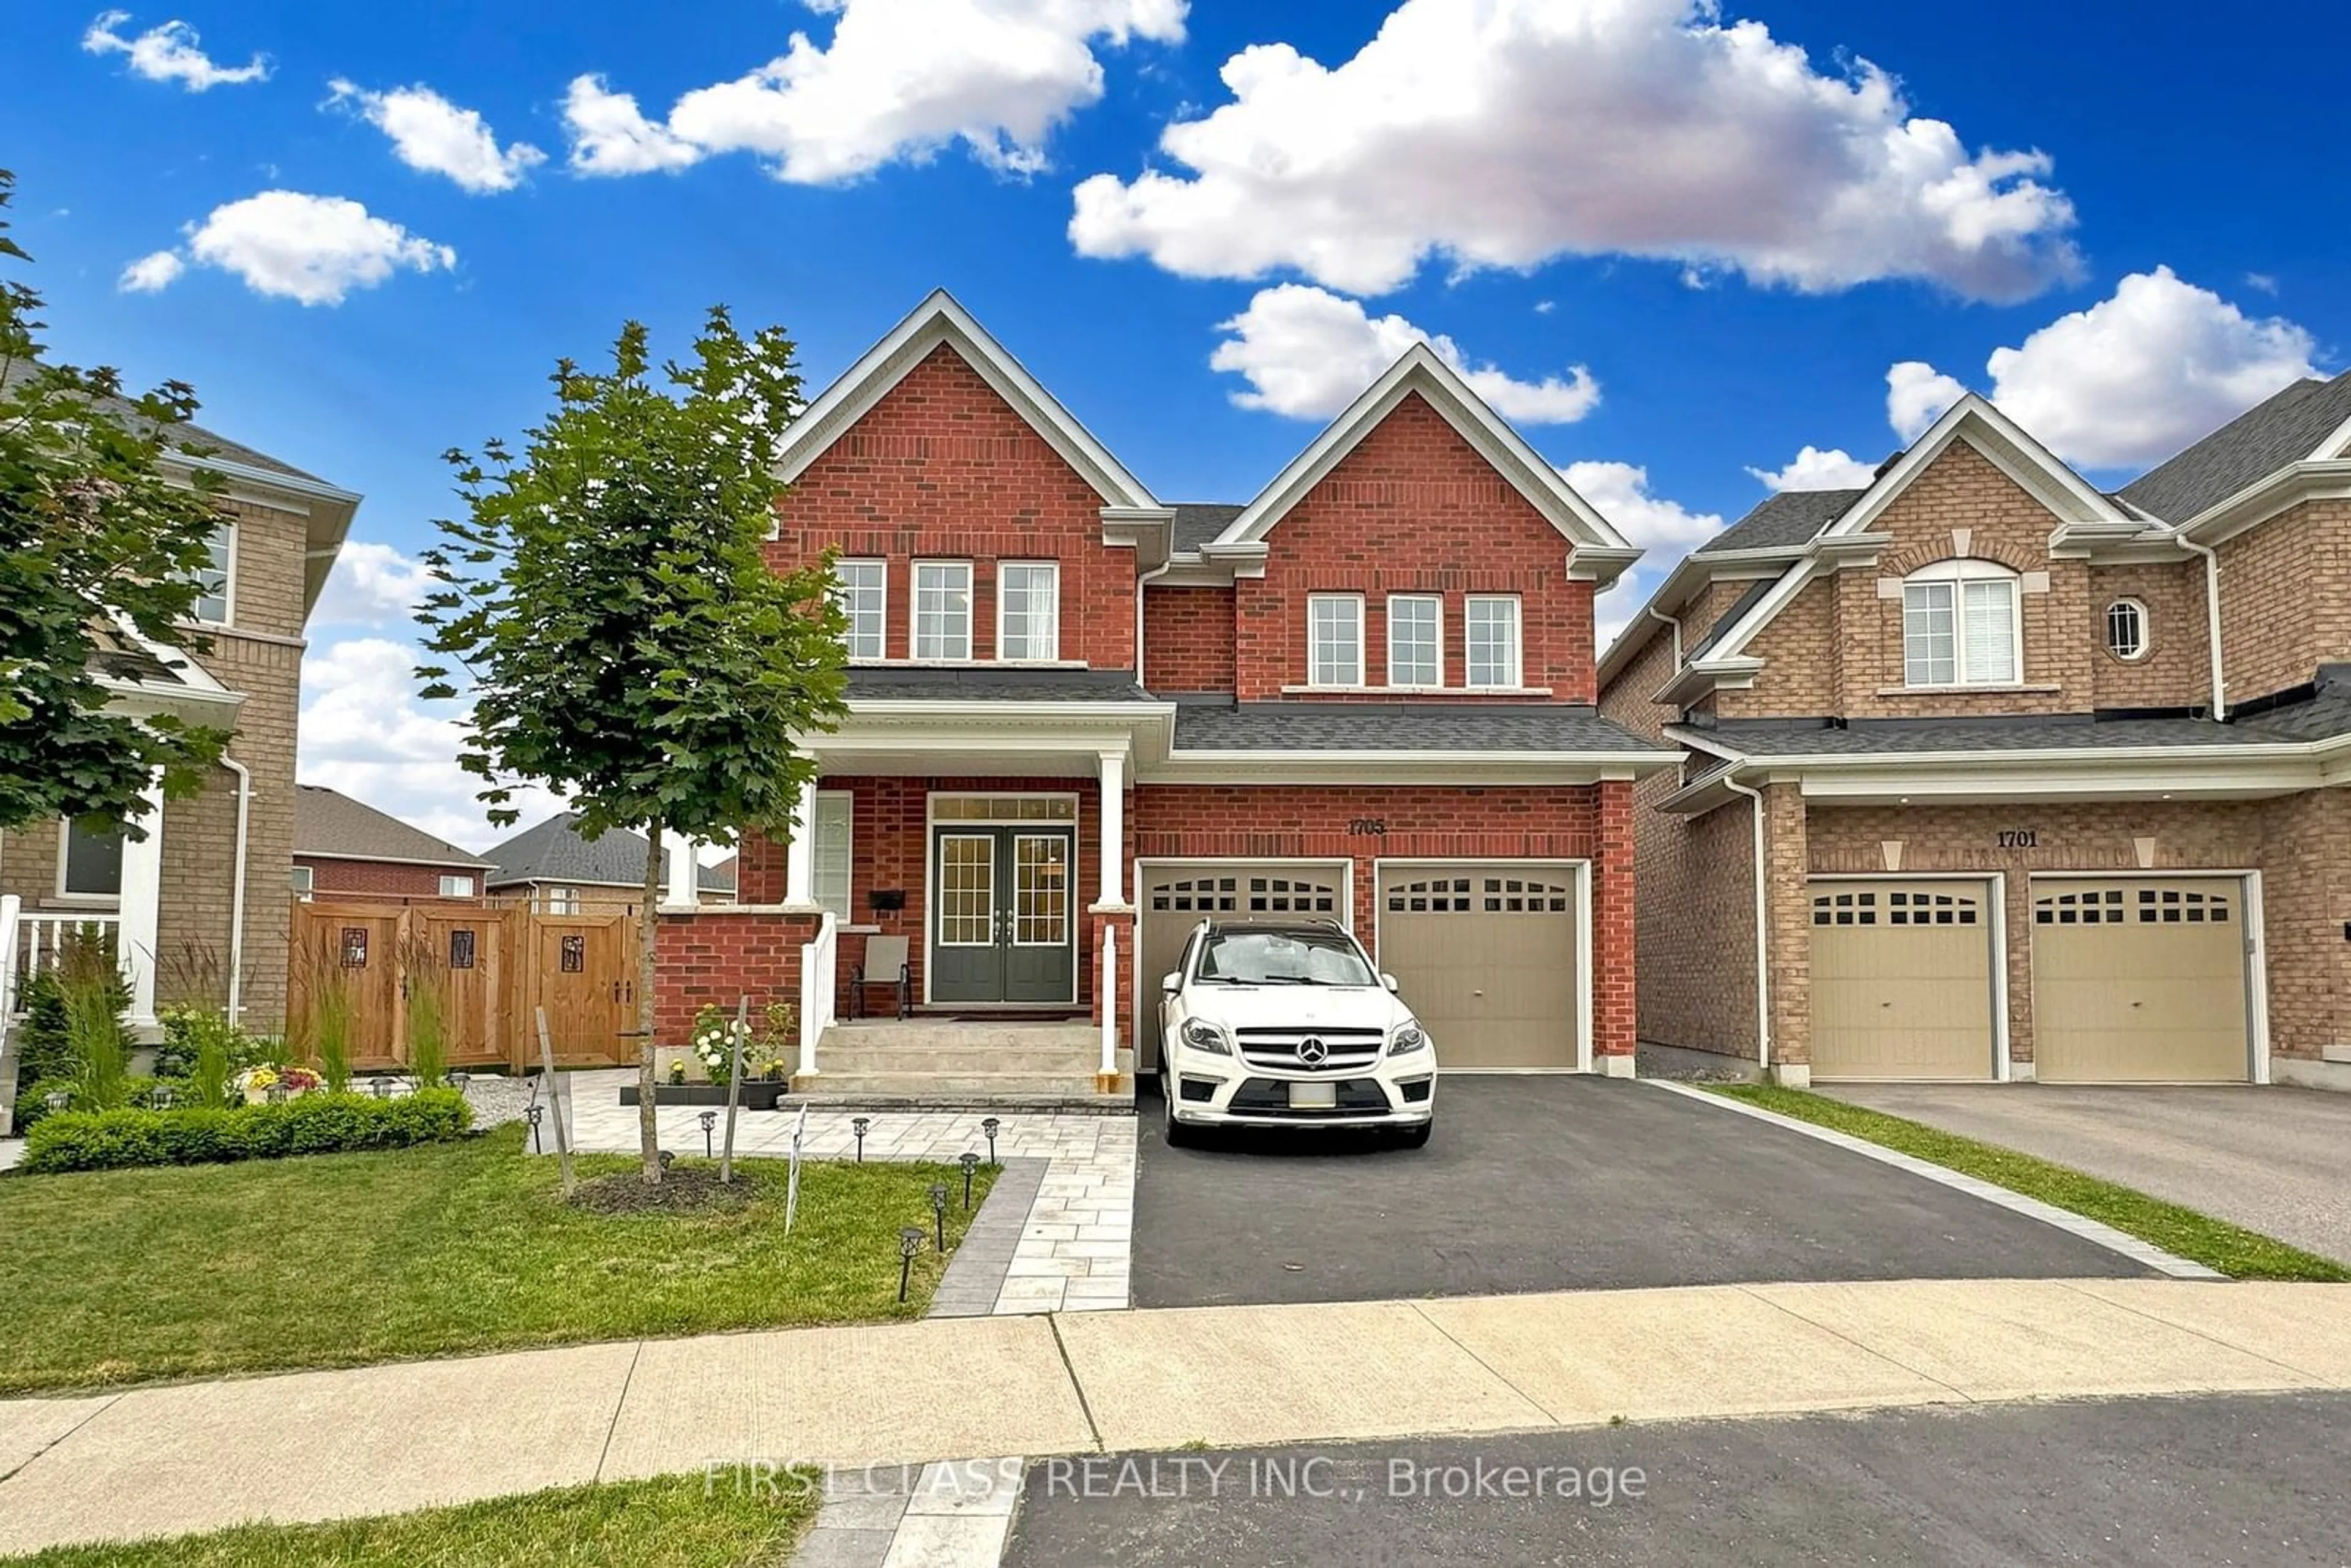 Home with brick exterior material for 1705 Frederick Mason Dr, Oshawa Ontario L1K 0X5